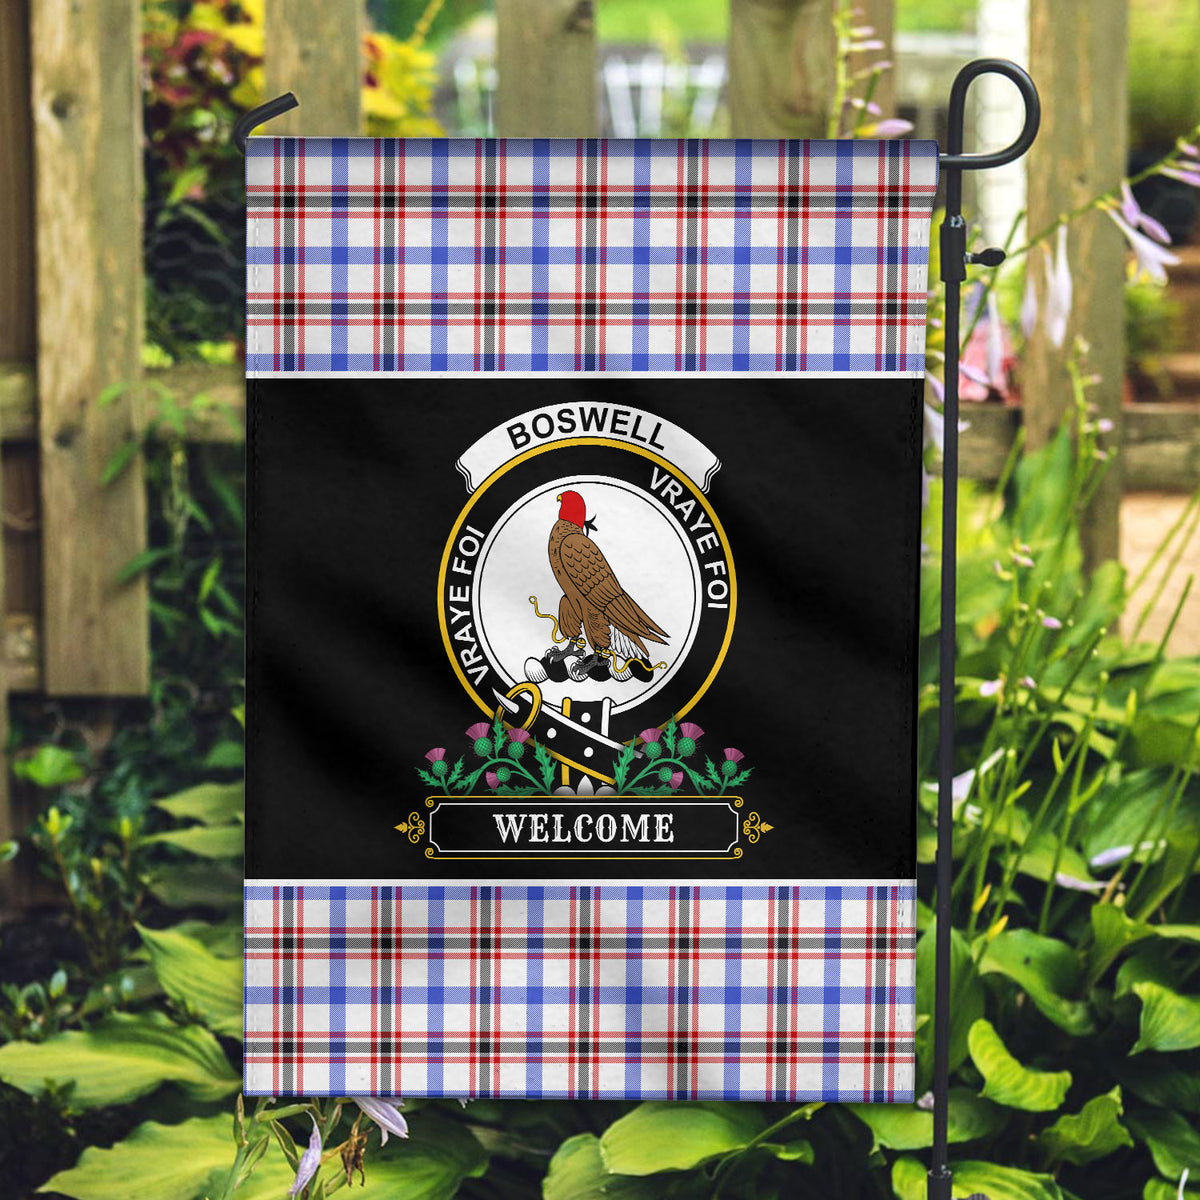 Boswell Modern Tartan Crest Garden Flag - Welcome Style